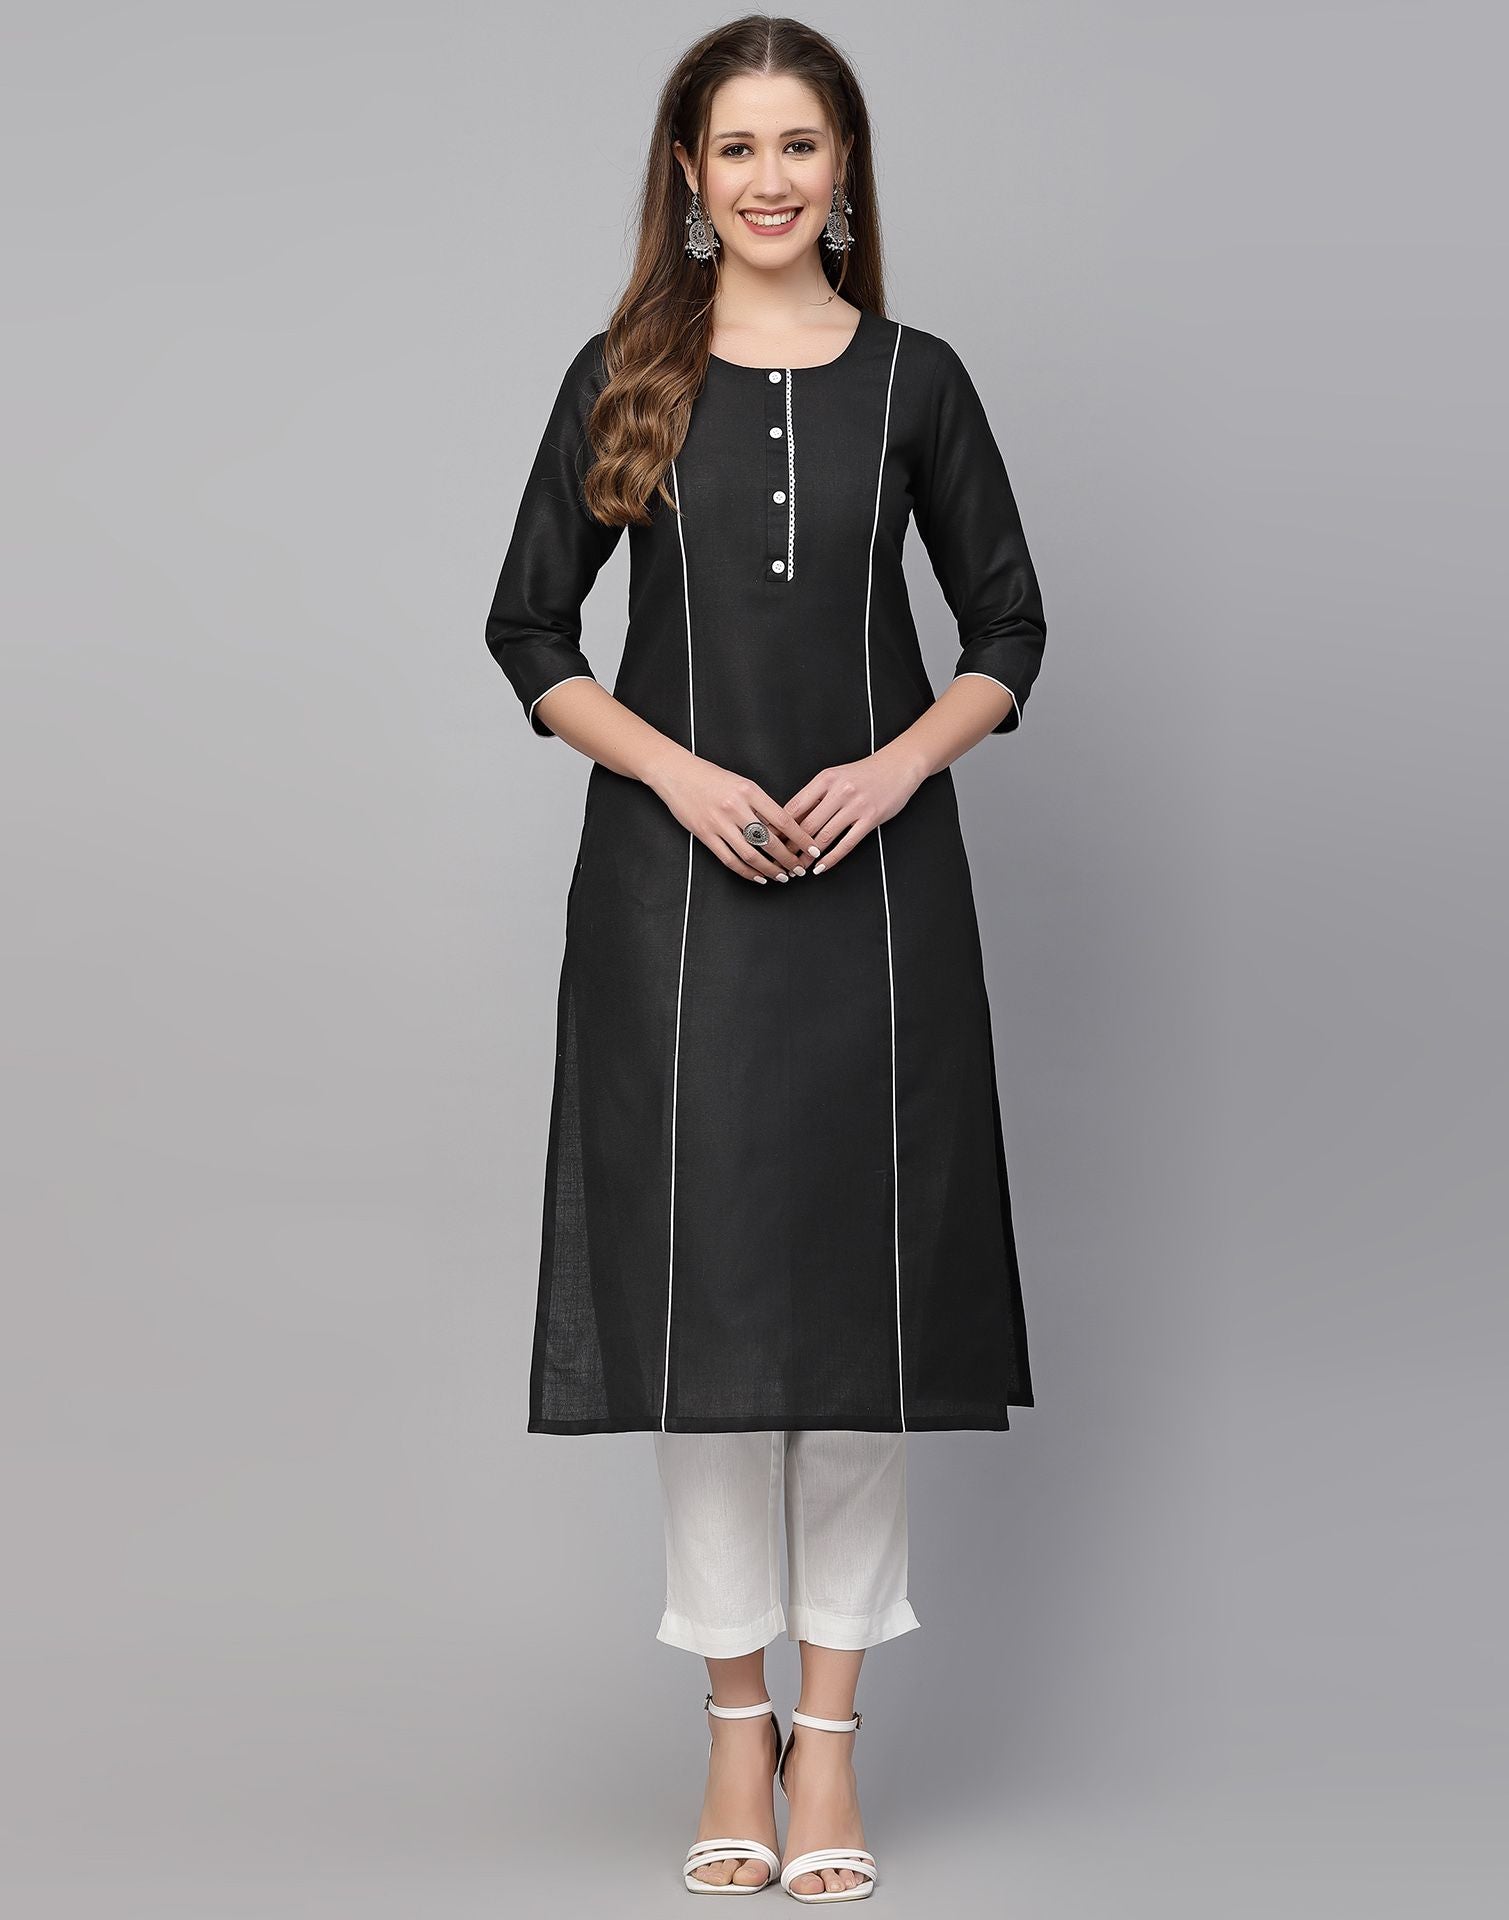 Black plain cotton kurti - AUJJESSA DESIGNS PRIVATE LIMITED - 2889832